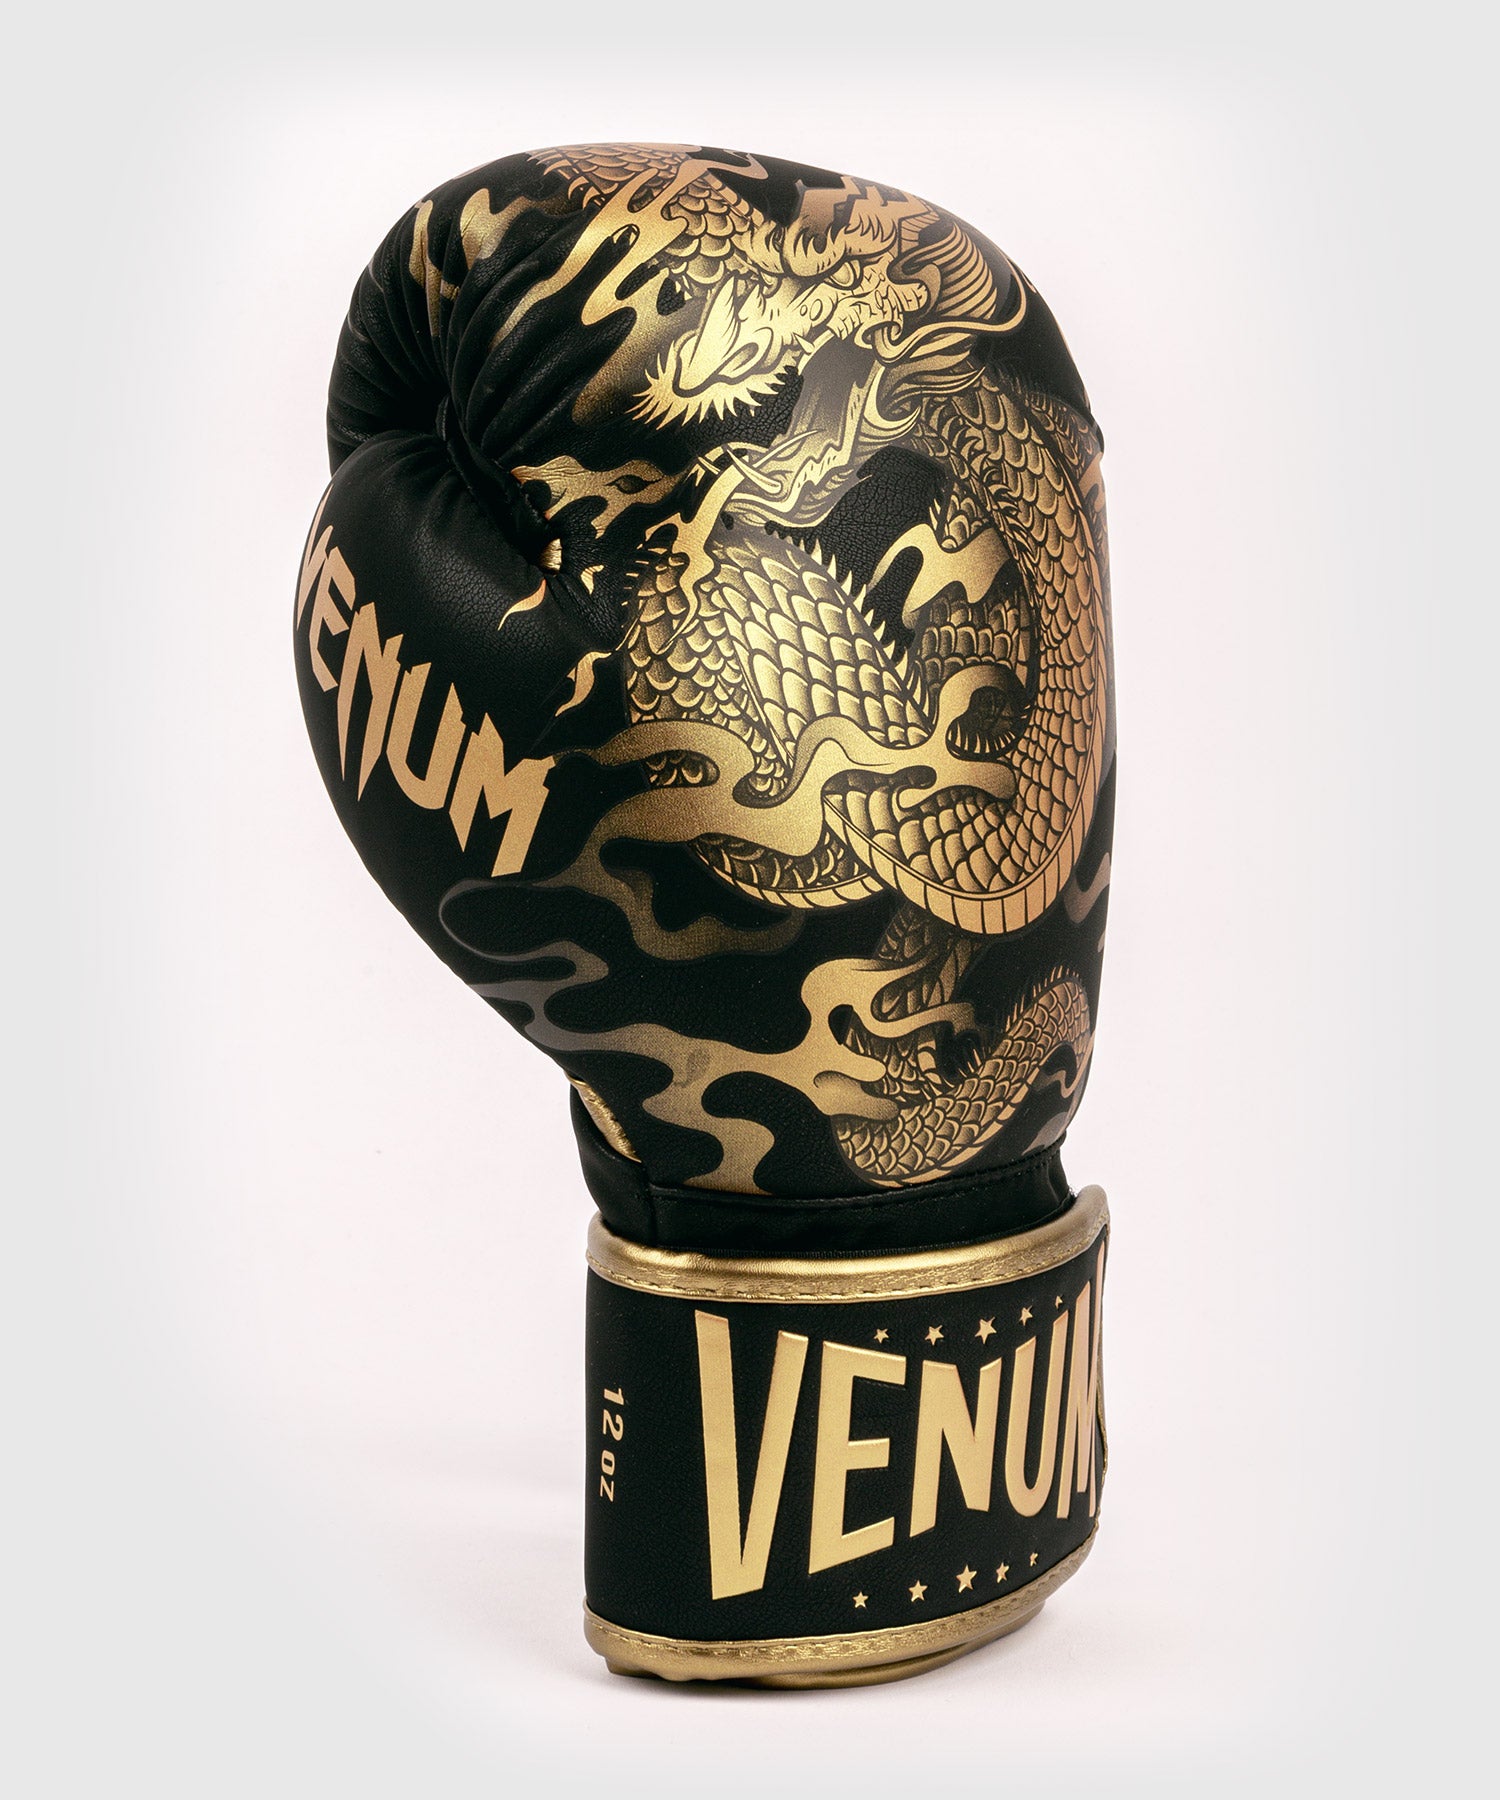 Gants de boxe Venum Vol du dragon Noir-bronze -  – Combat  Arena